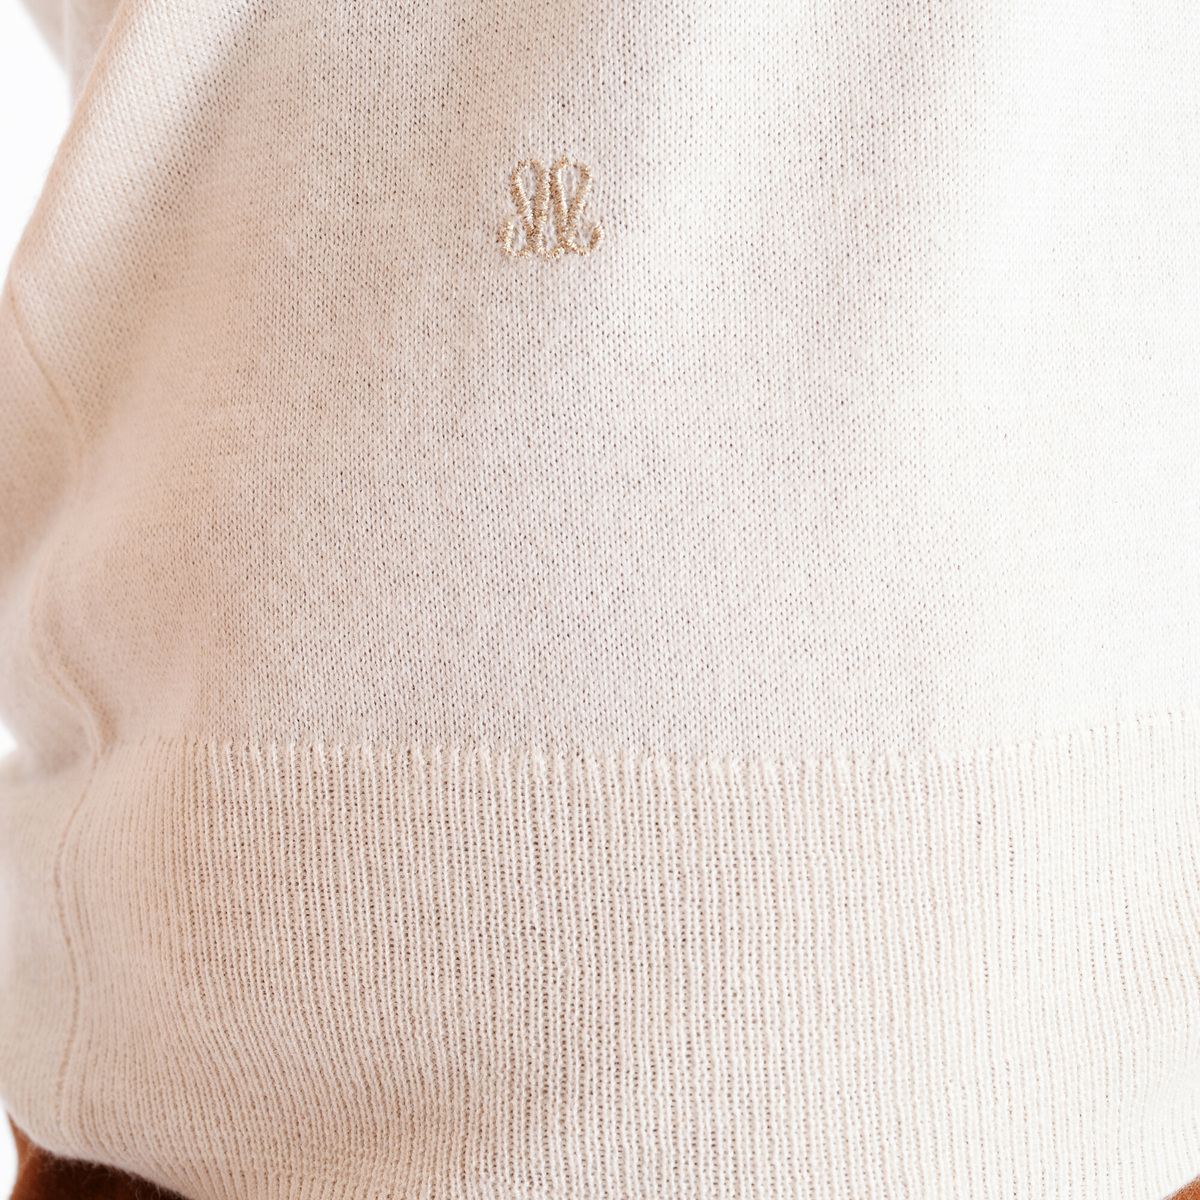 Villette jumper, White - Sleeveless - Silk and cashmere - image 4